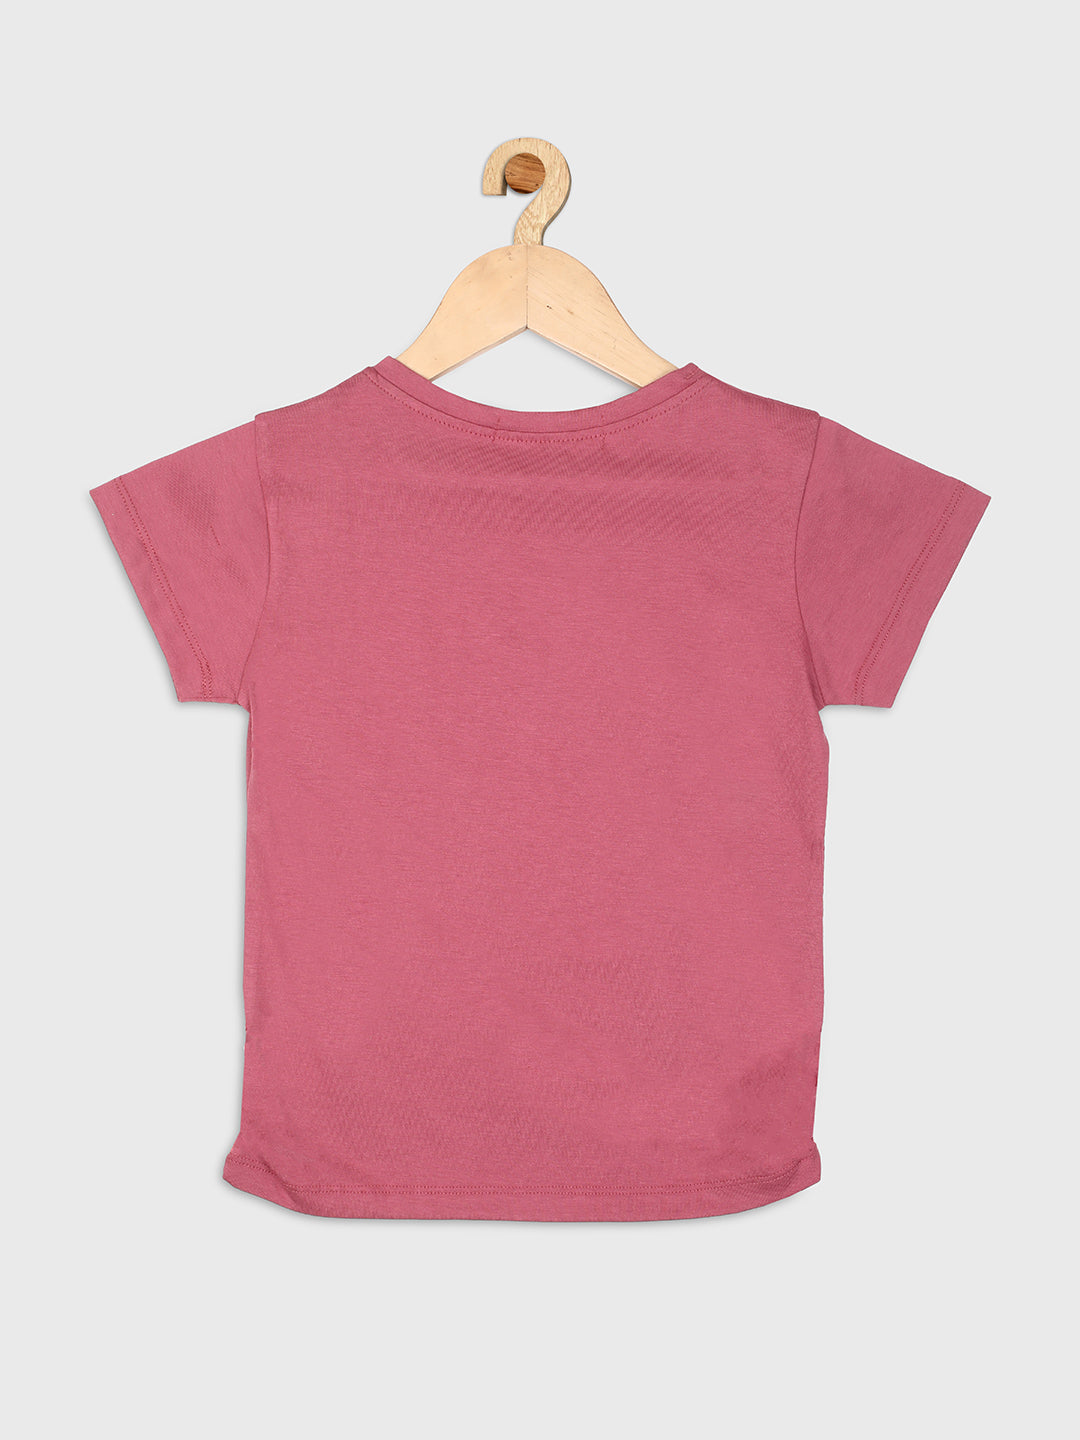 Nins Moda Girls Printed Stretchable Top-O.Pink